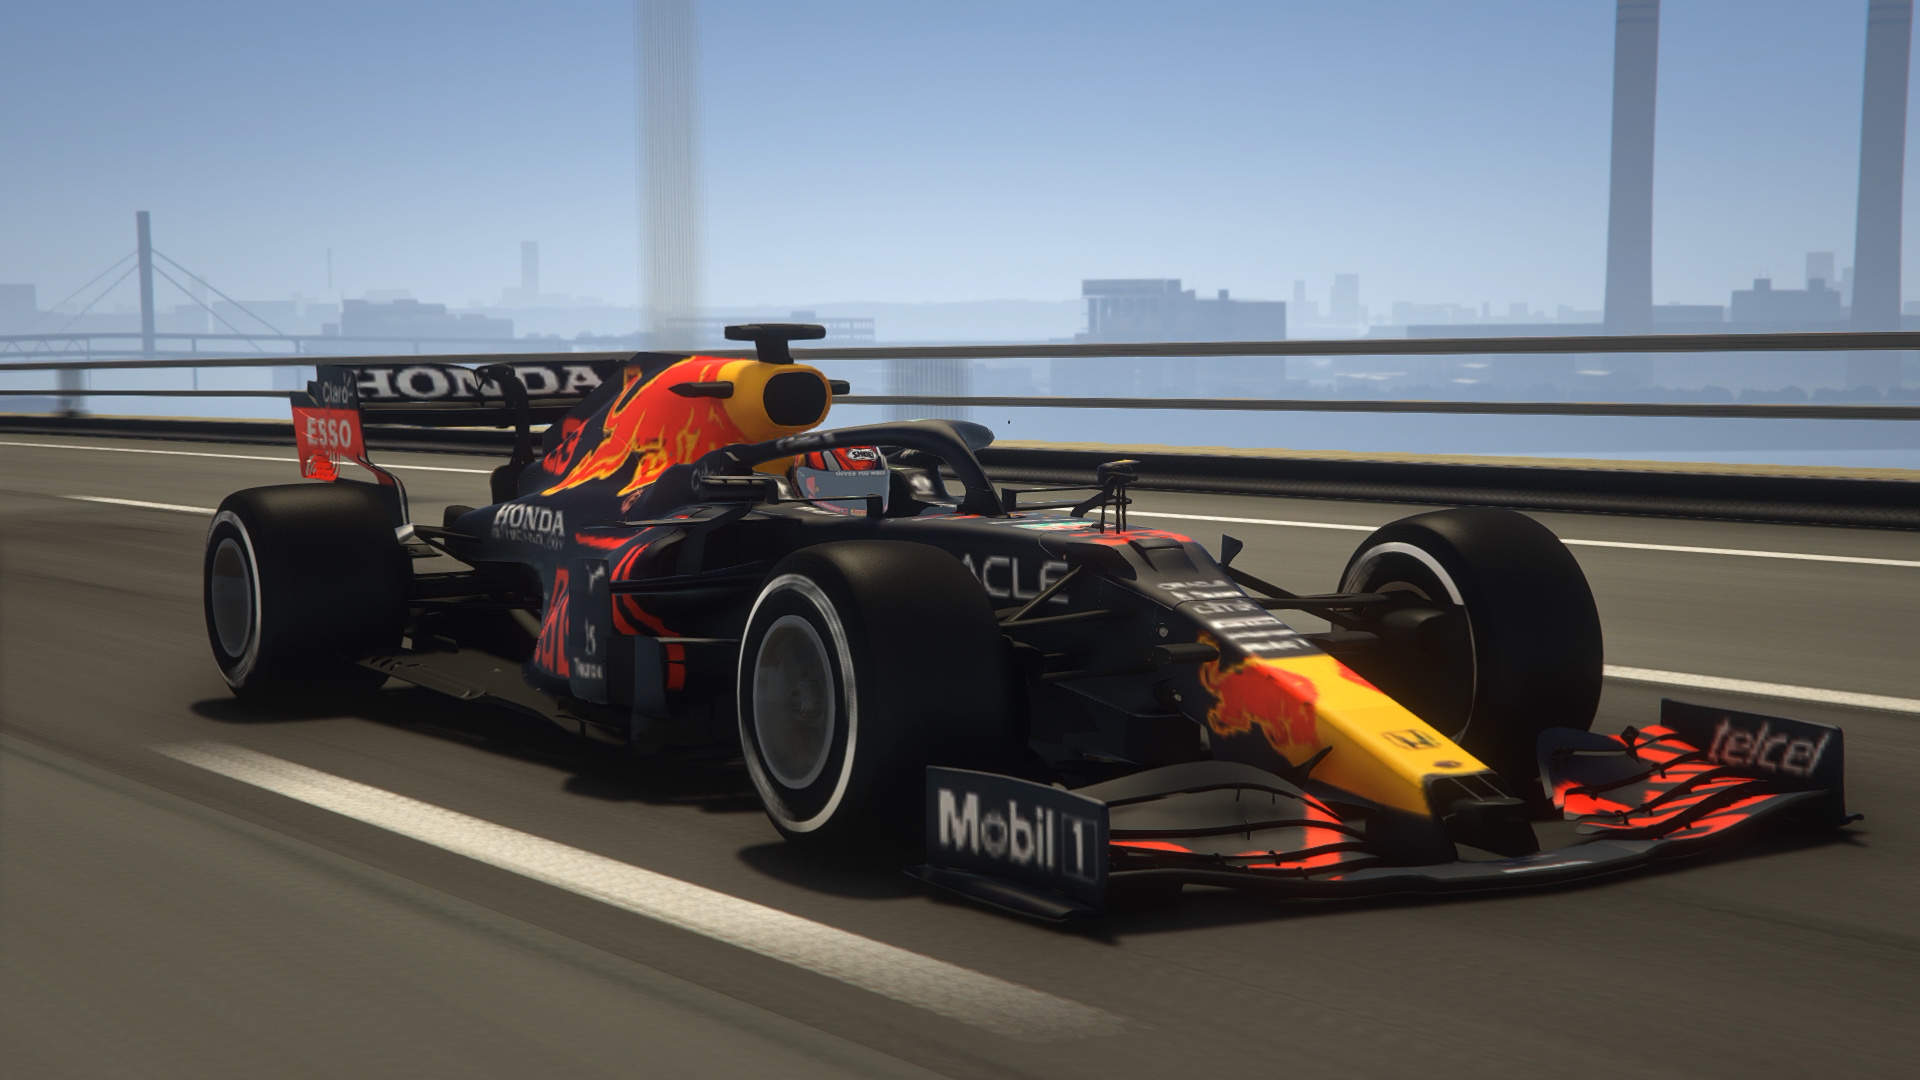 Red Bull Racing Honda Formule 1 2021 de Motorsport Images en